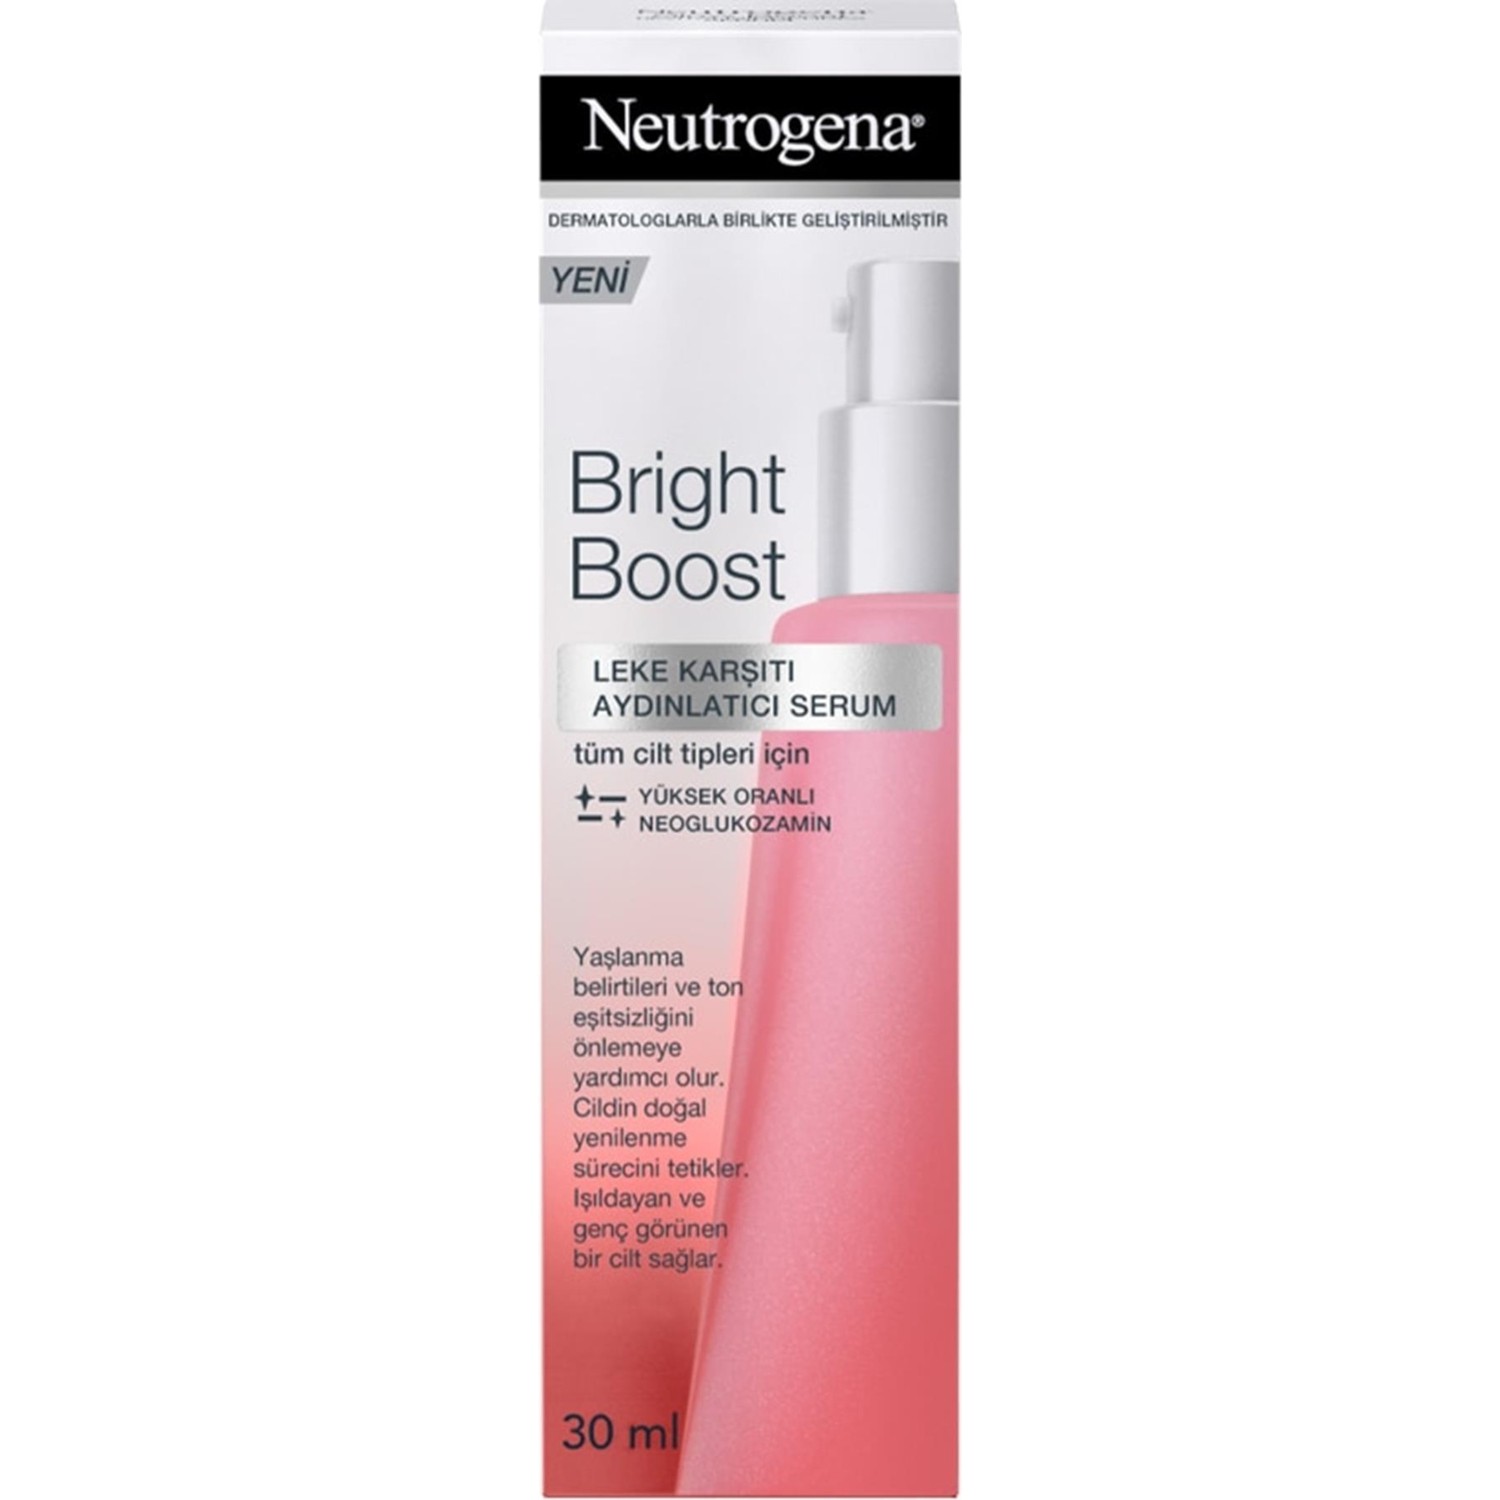 Сыворотка осветляющая Neutrogena Bright Boost против несовершенств, 30 мл маска neutrogena bright boost осветляющая гидрогелевая 30 мл